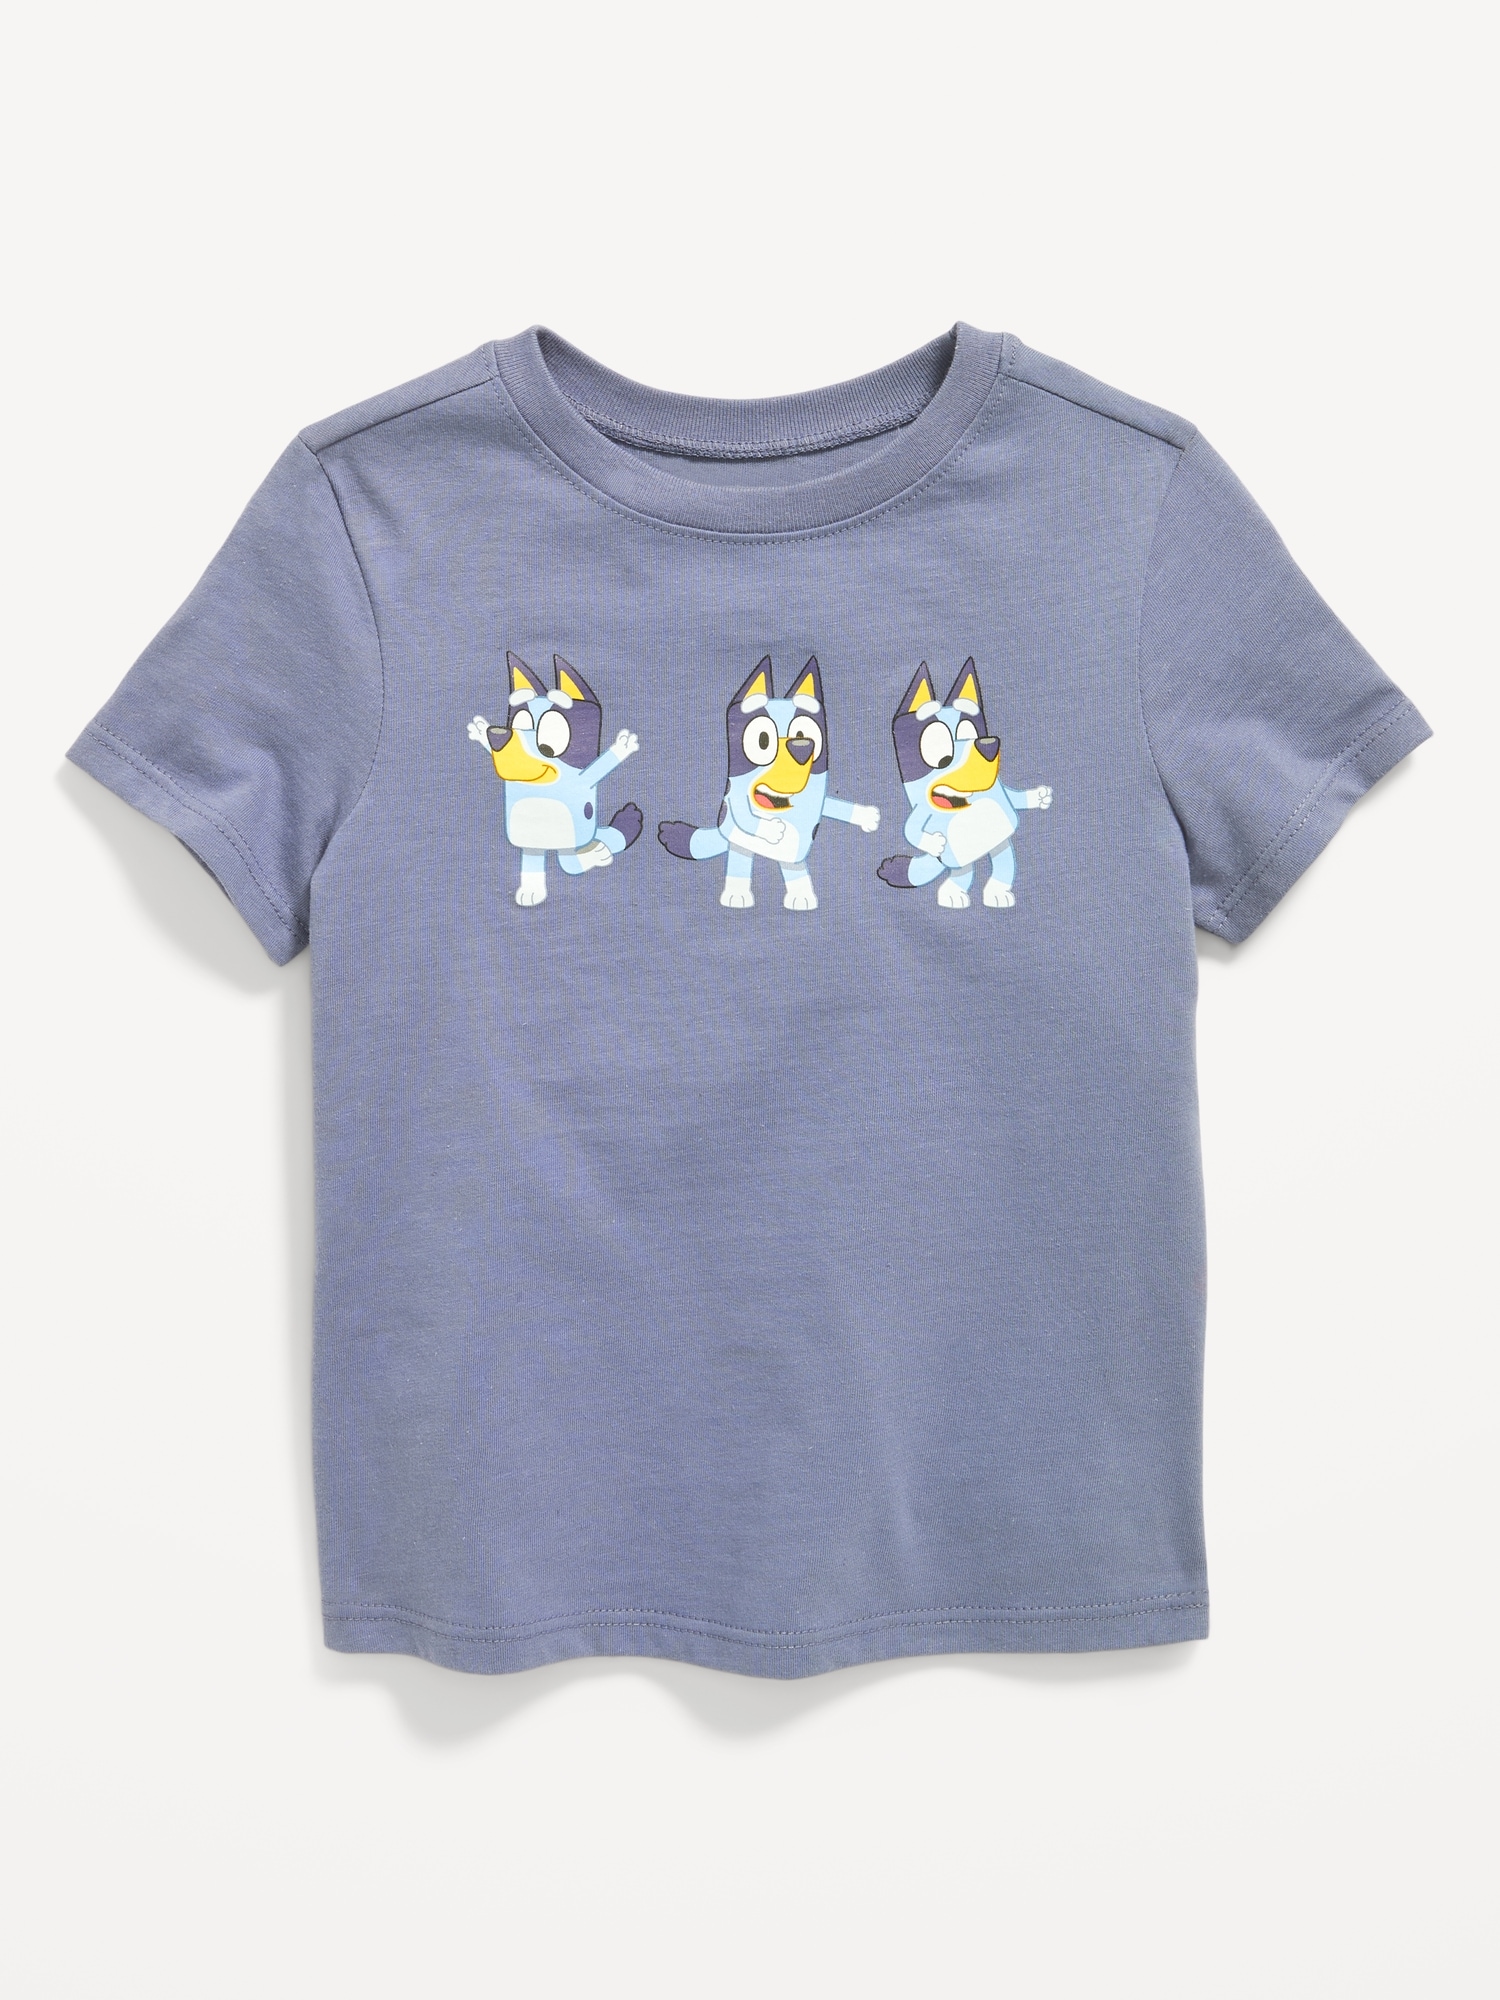 Bluey Big Boys 3 Pack Graphic T-Shirts 10-12